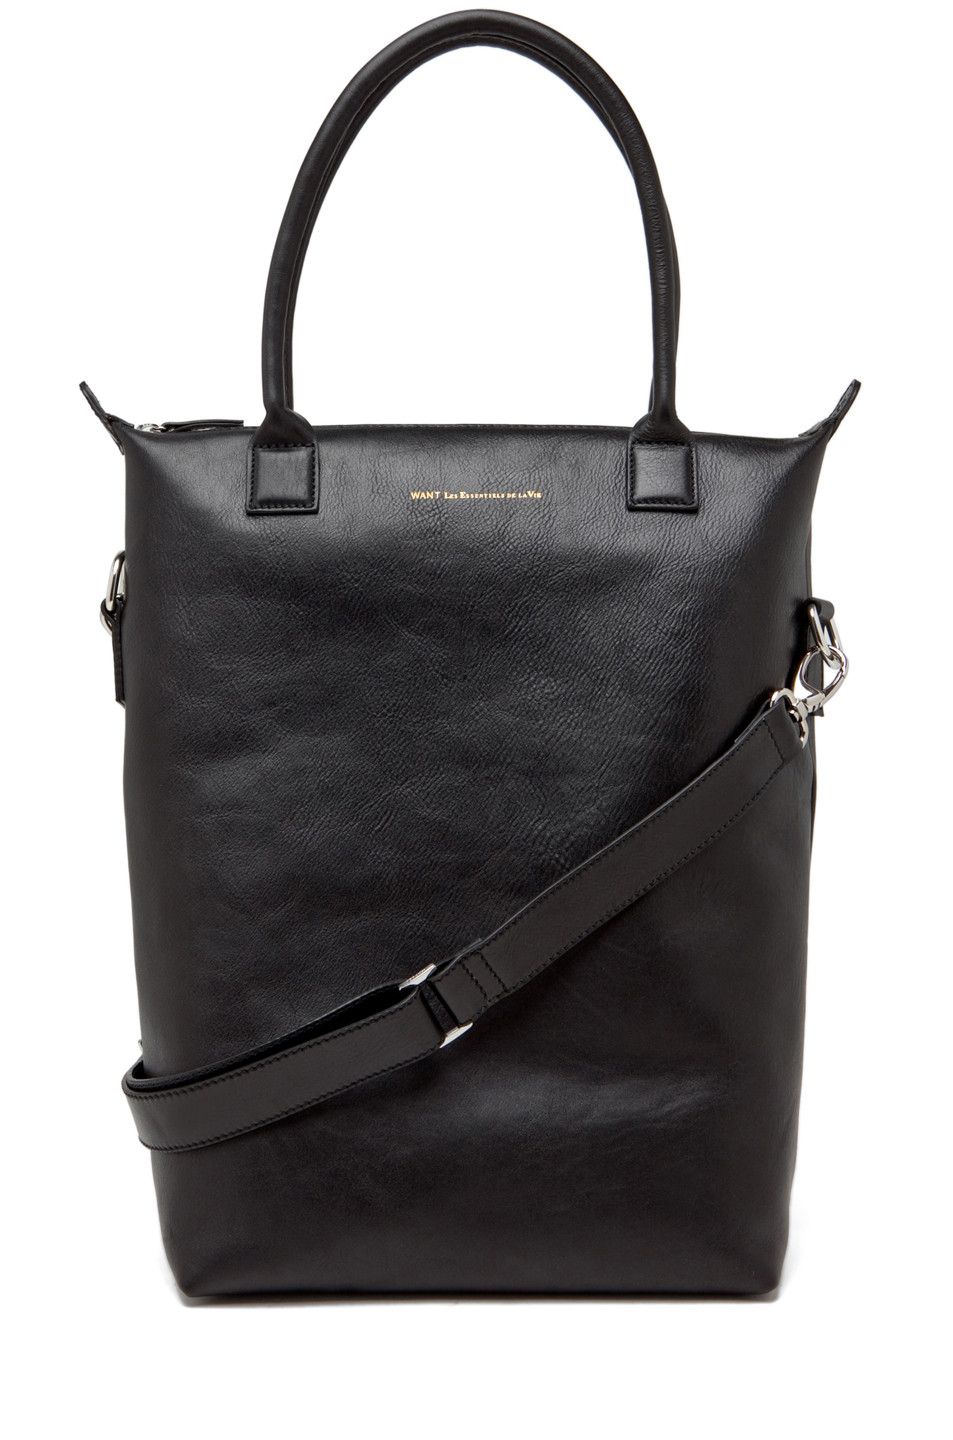 WANT Les Essentiels Orly Black Leather Tote Bag w/ Detachable Strap ...